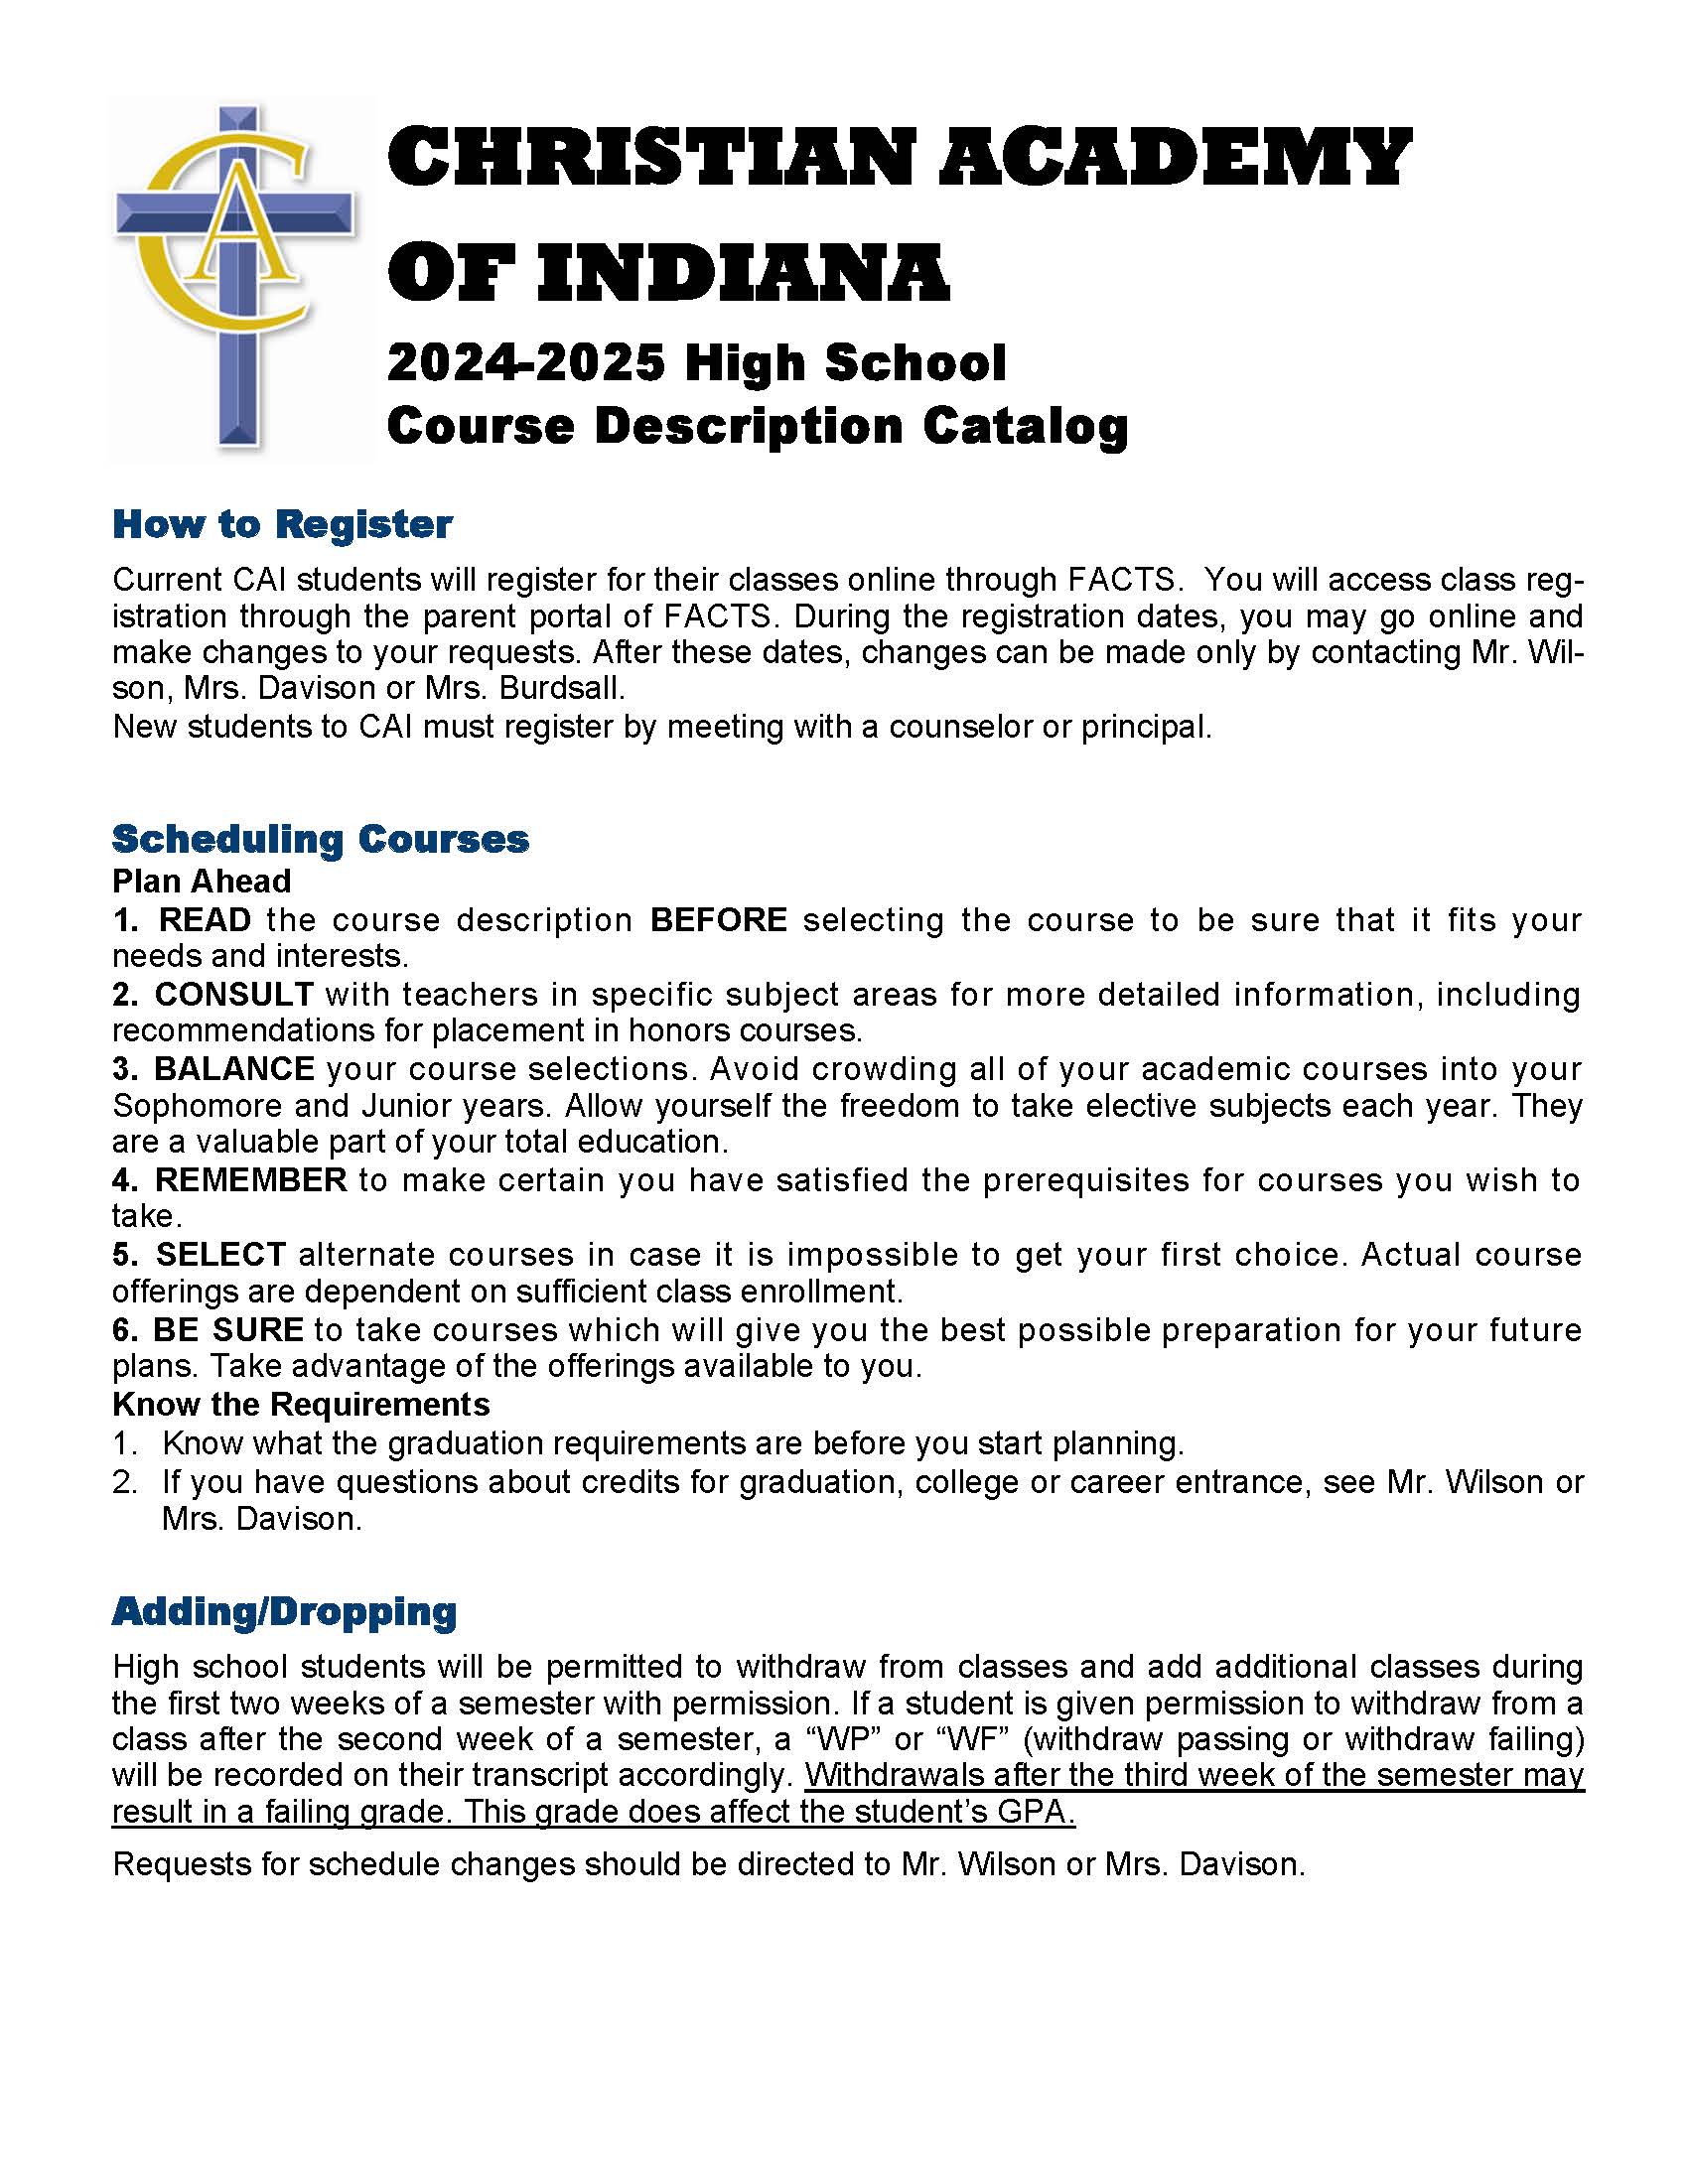 Christian Academy School System | Christian Academy of Indiana | High School Course Description Catalog | 2024-2025